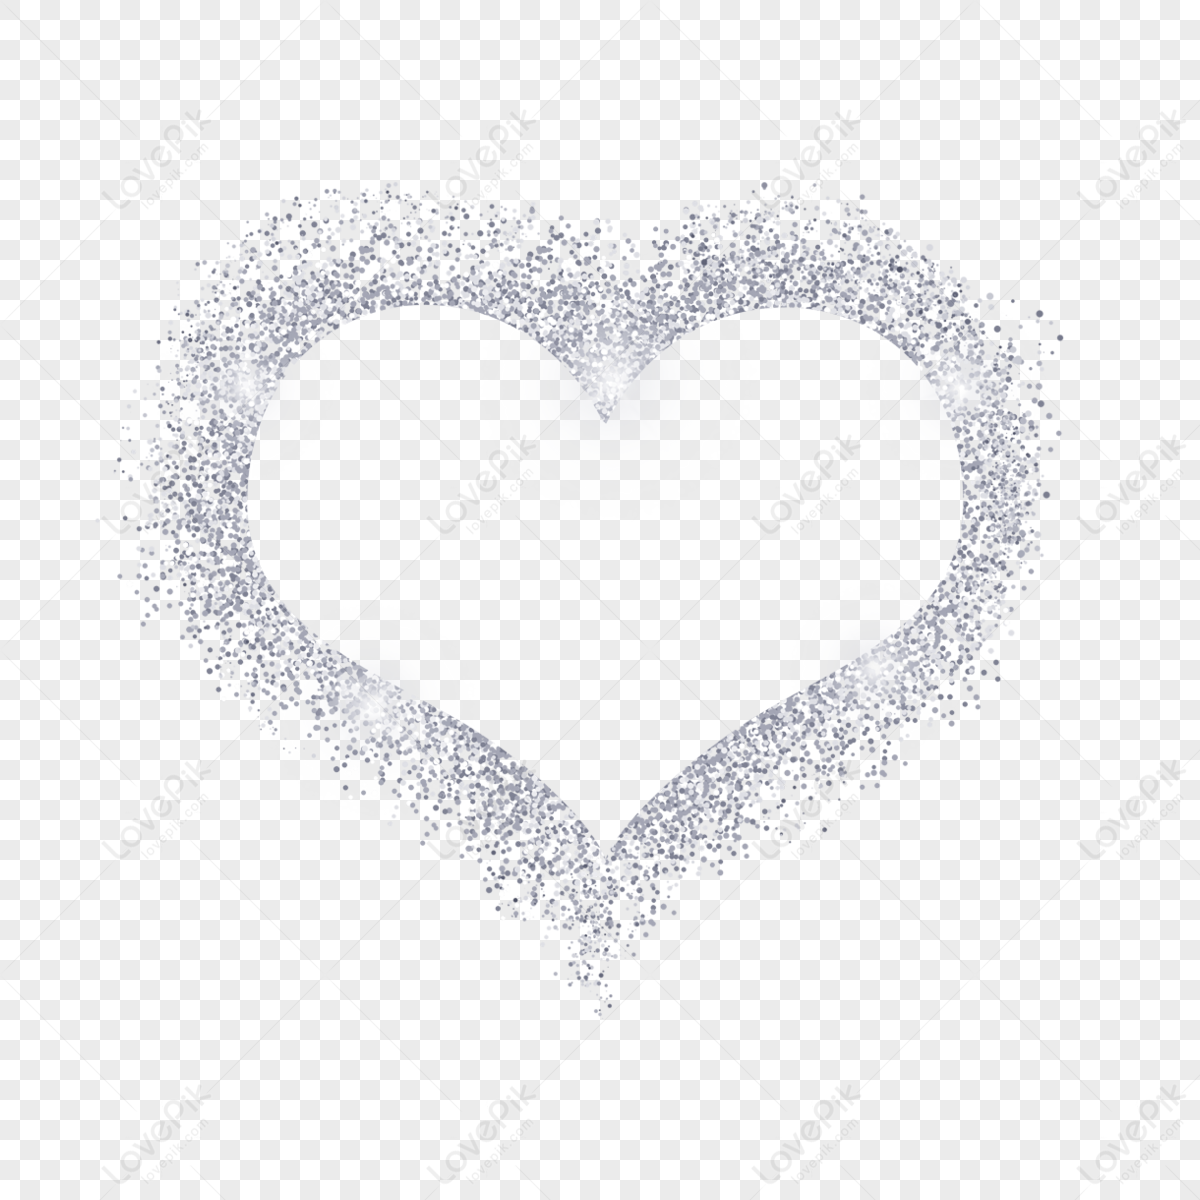 Silver Metal Heart Shape Vector Illustration Royalty Free SVG